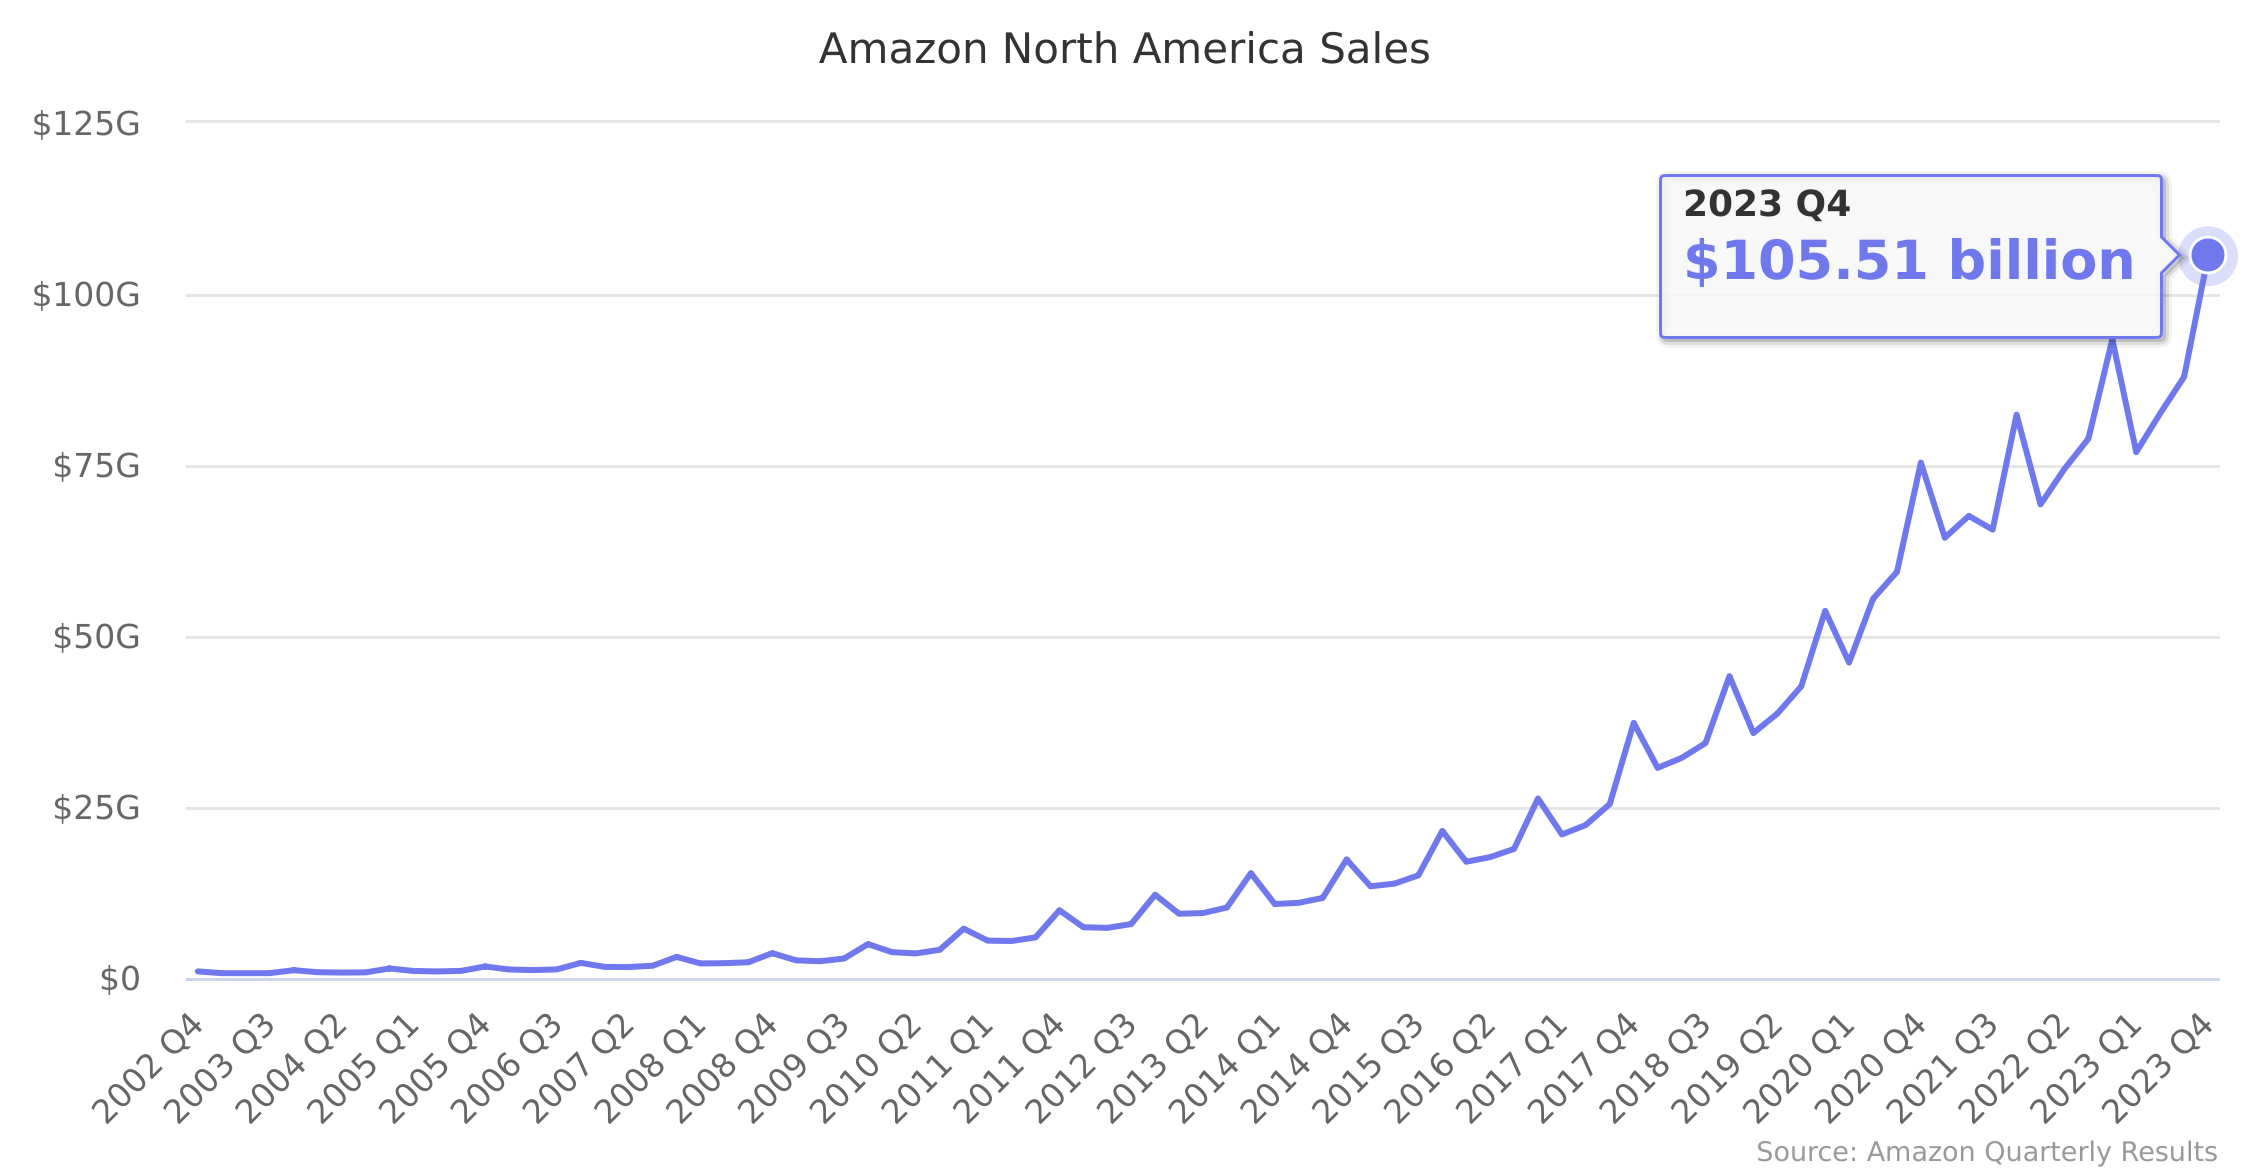 Amazon North America Sales 2002-2022